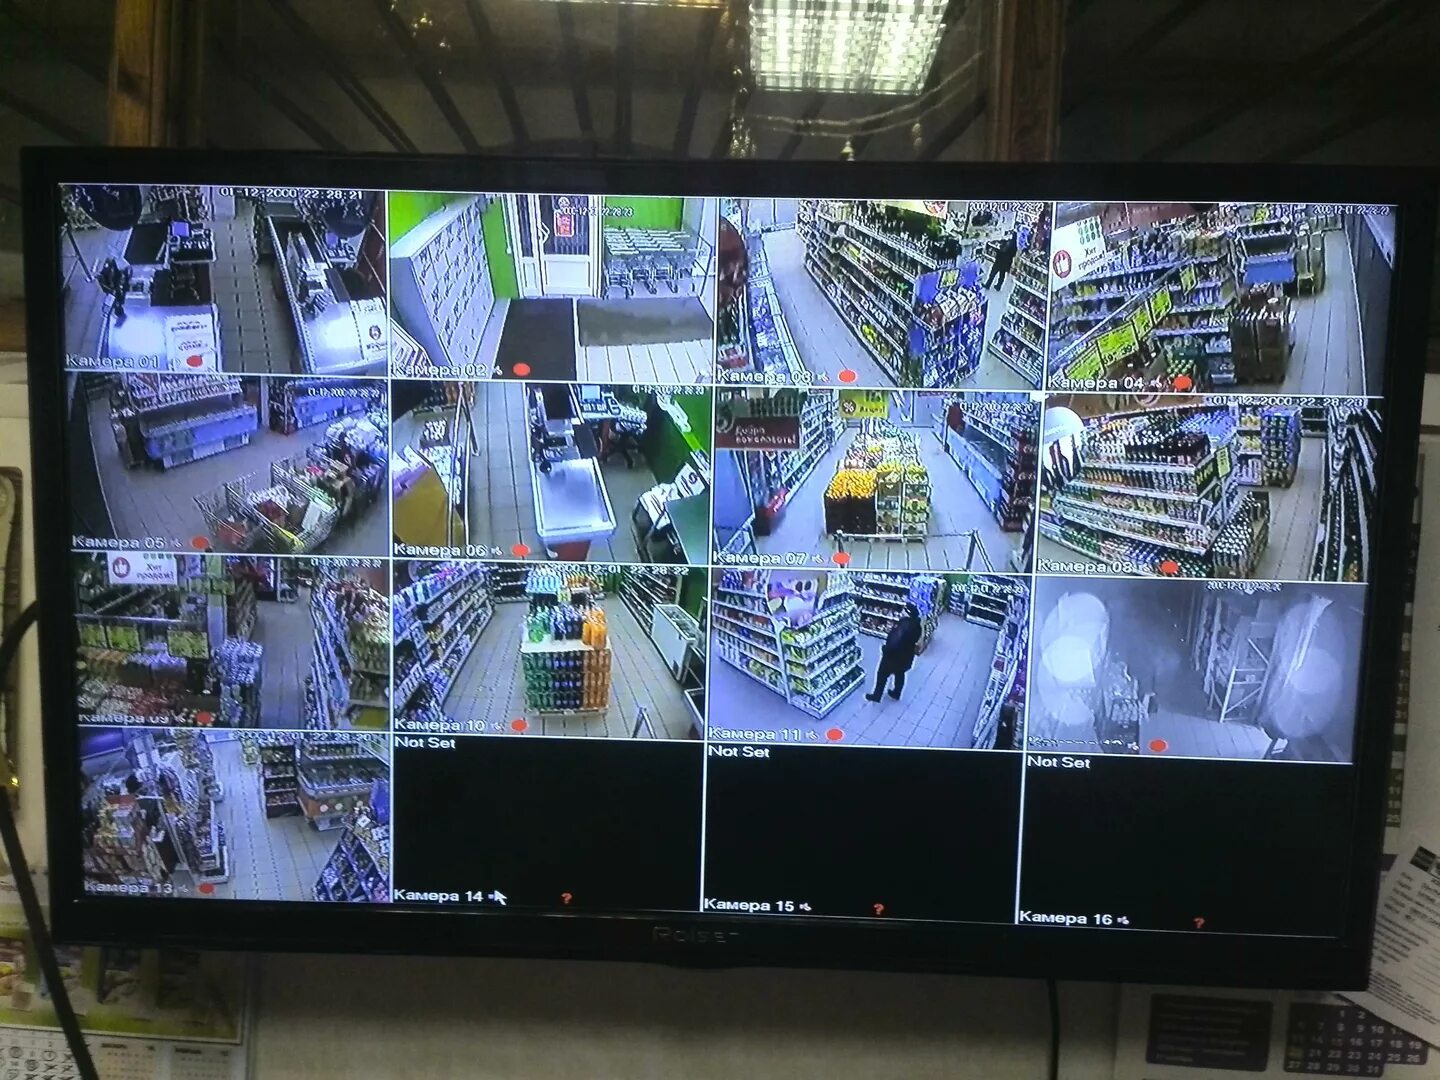 Камера видит экран. Камера наблюдения монитор. Монитор для видеонаблюдения. Камера видеонаблюдения в магазине. Монитор видеонаблюдения в магазине.